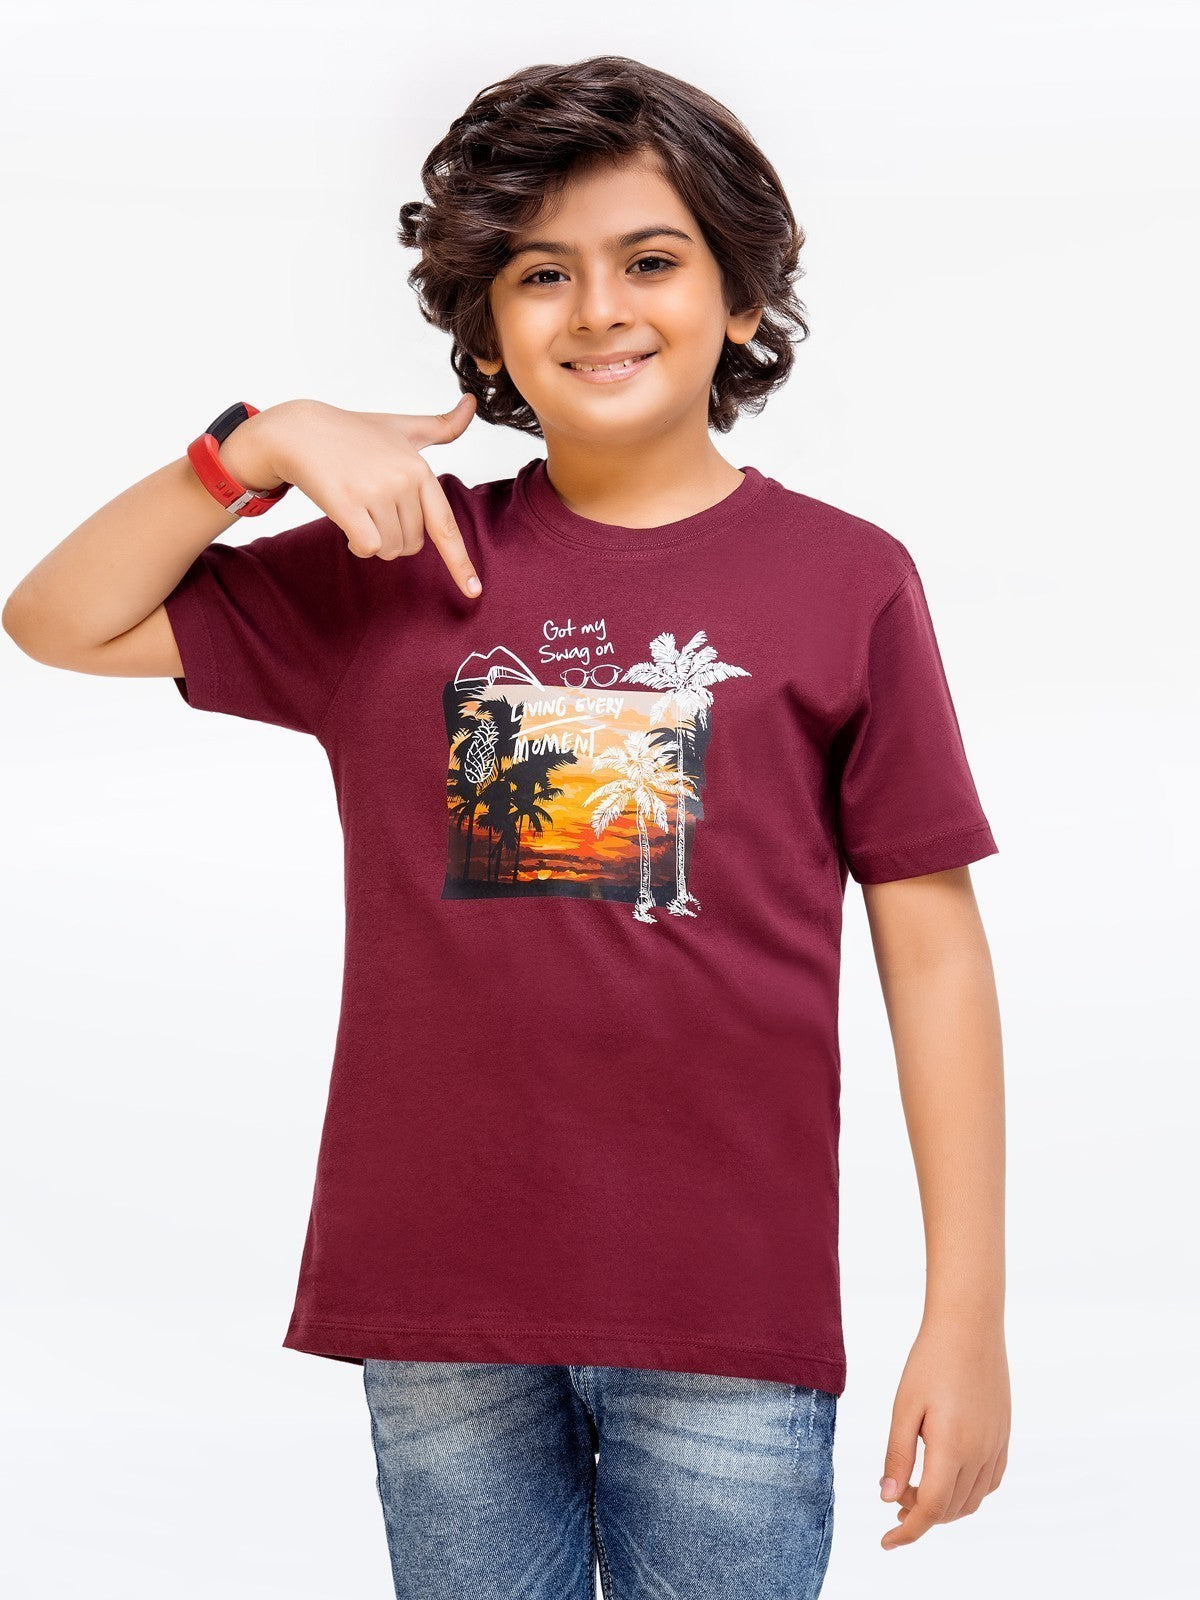 Boy's Maroon T-Shirt - EBTTS23-050